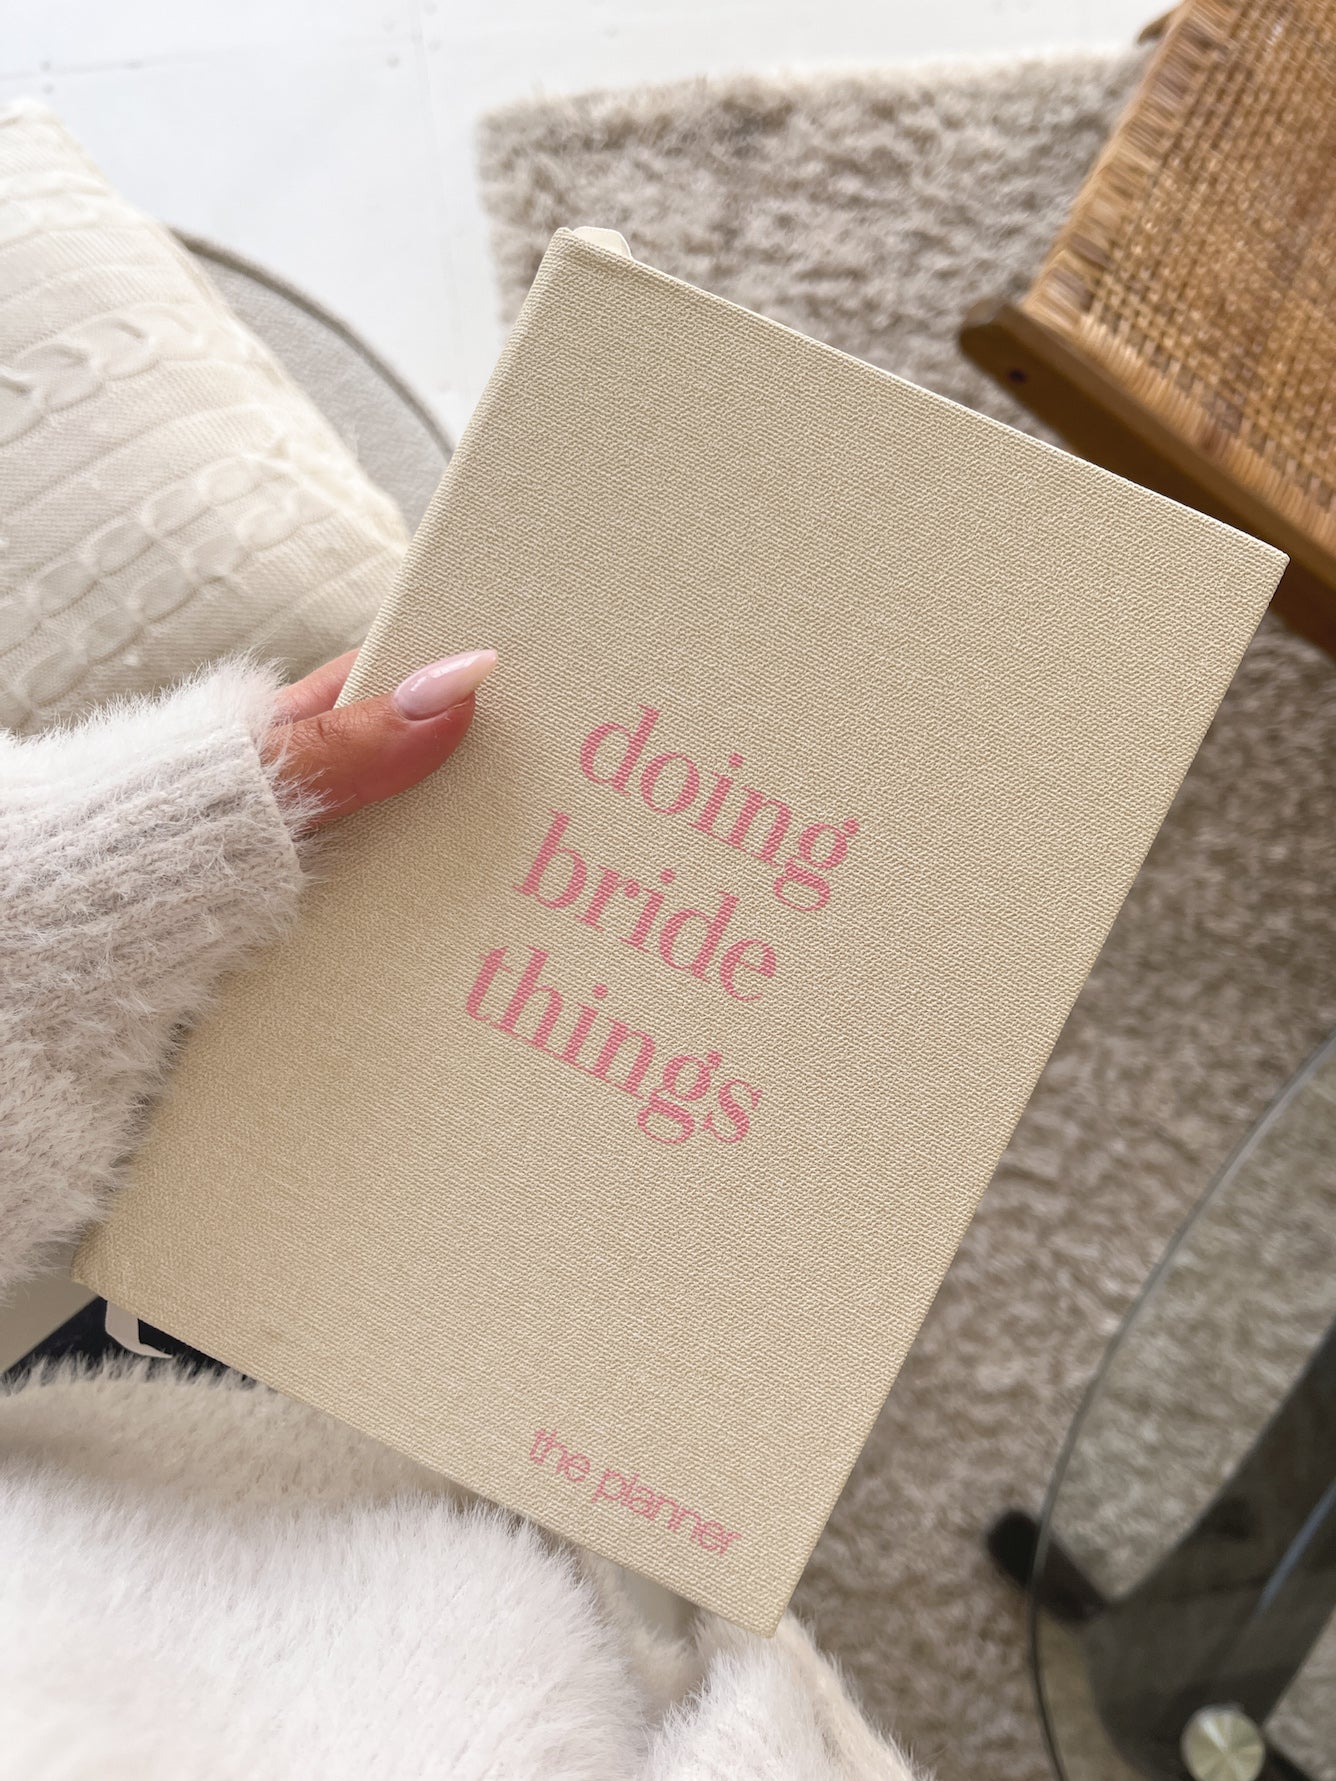 Doing Bride Things Planner